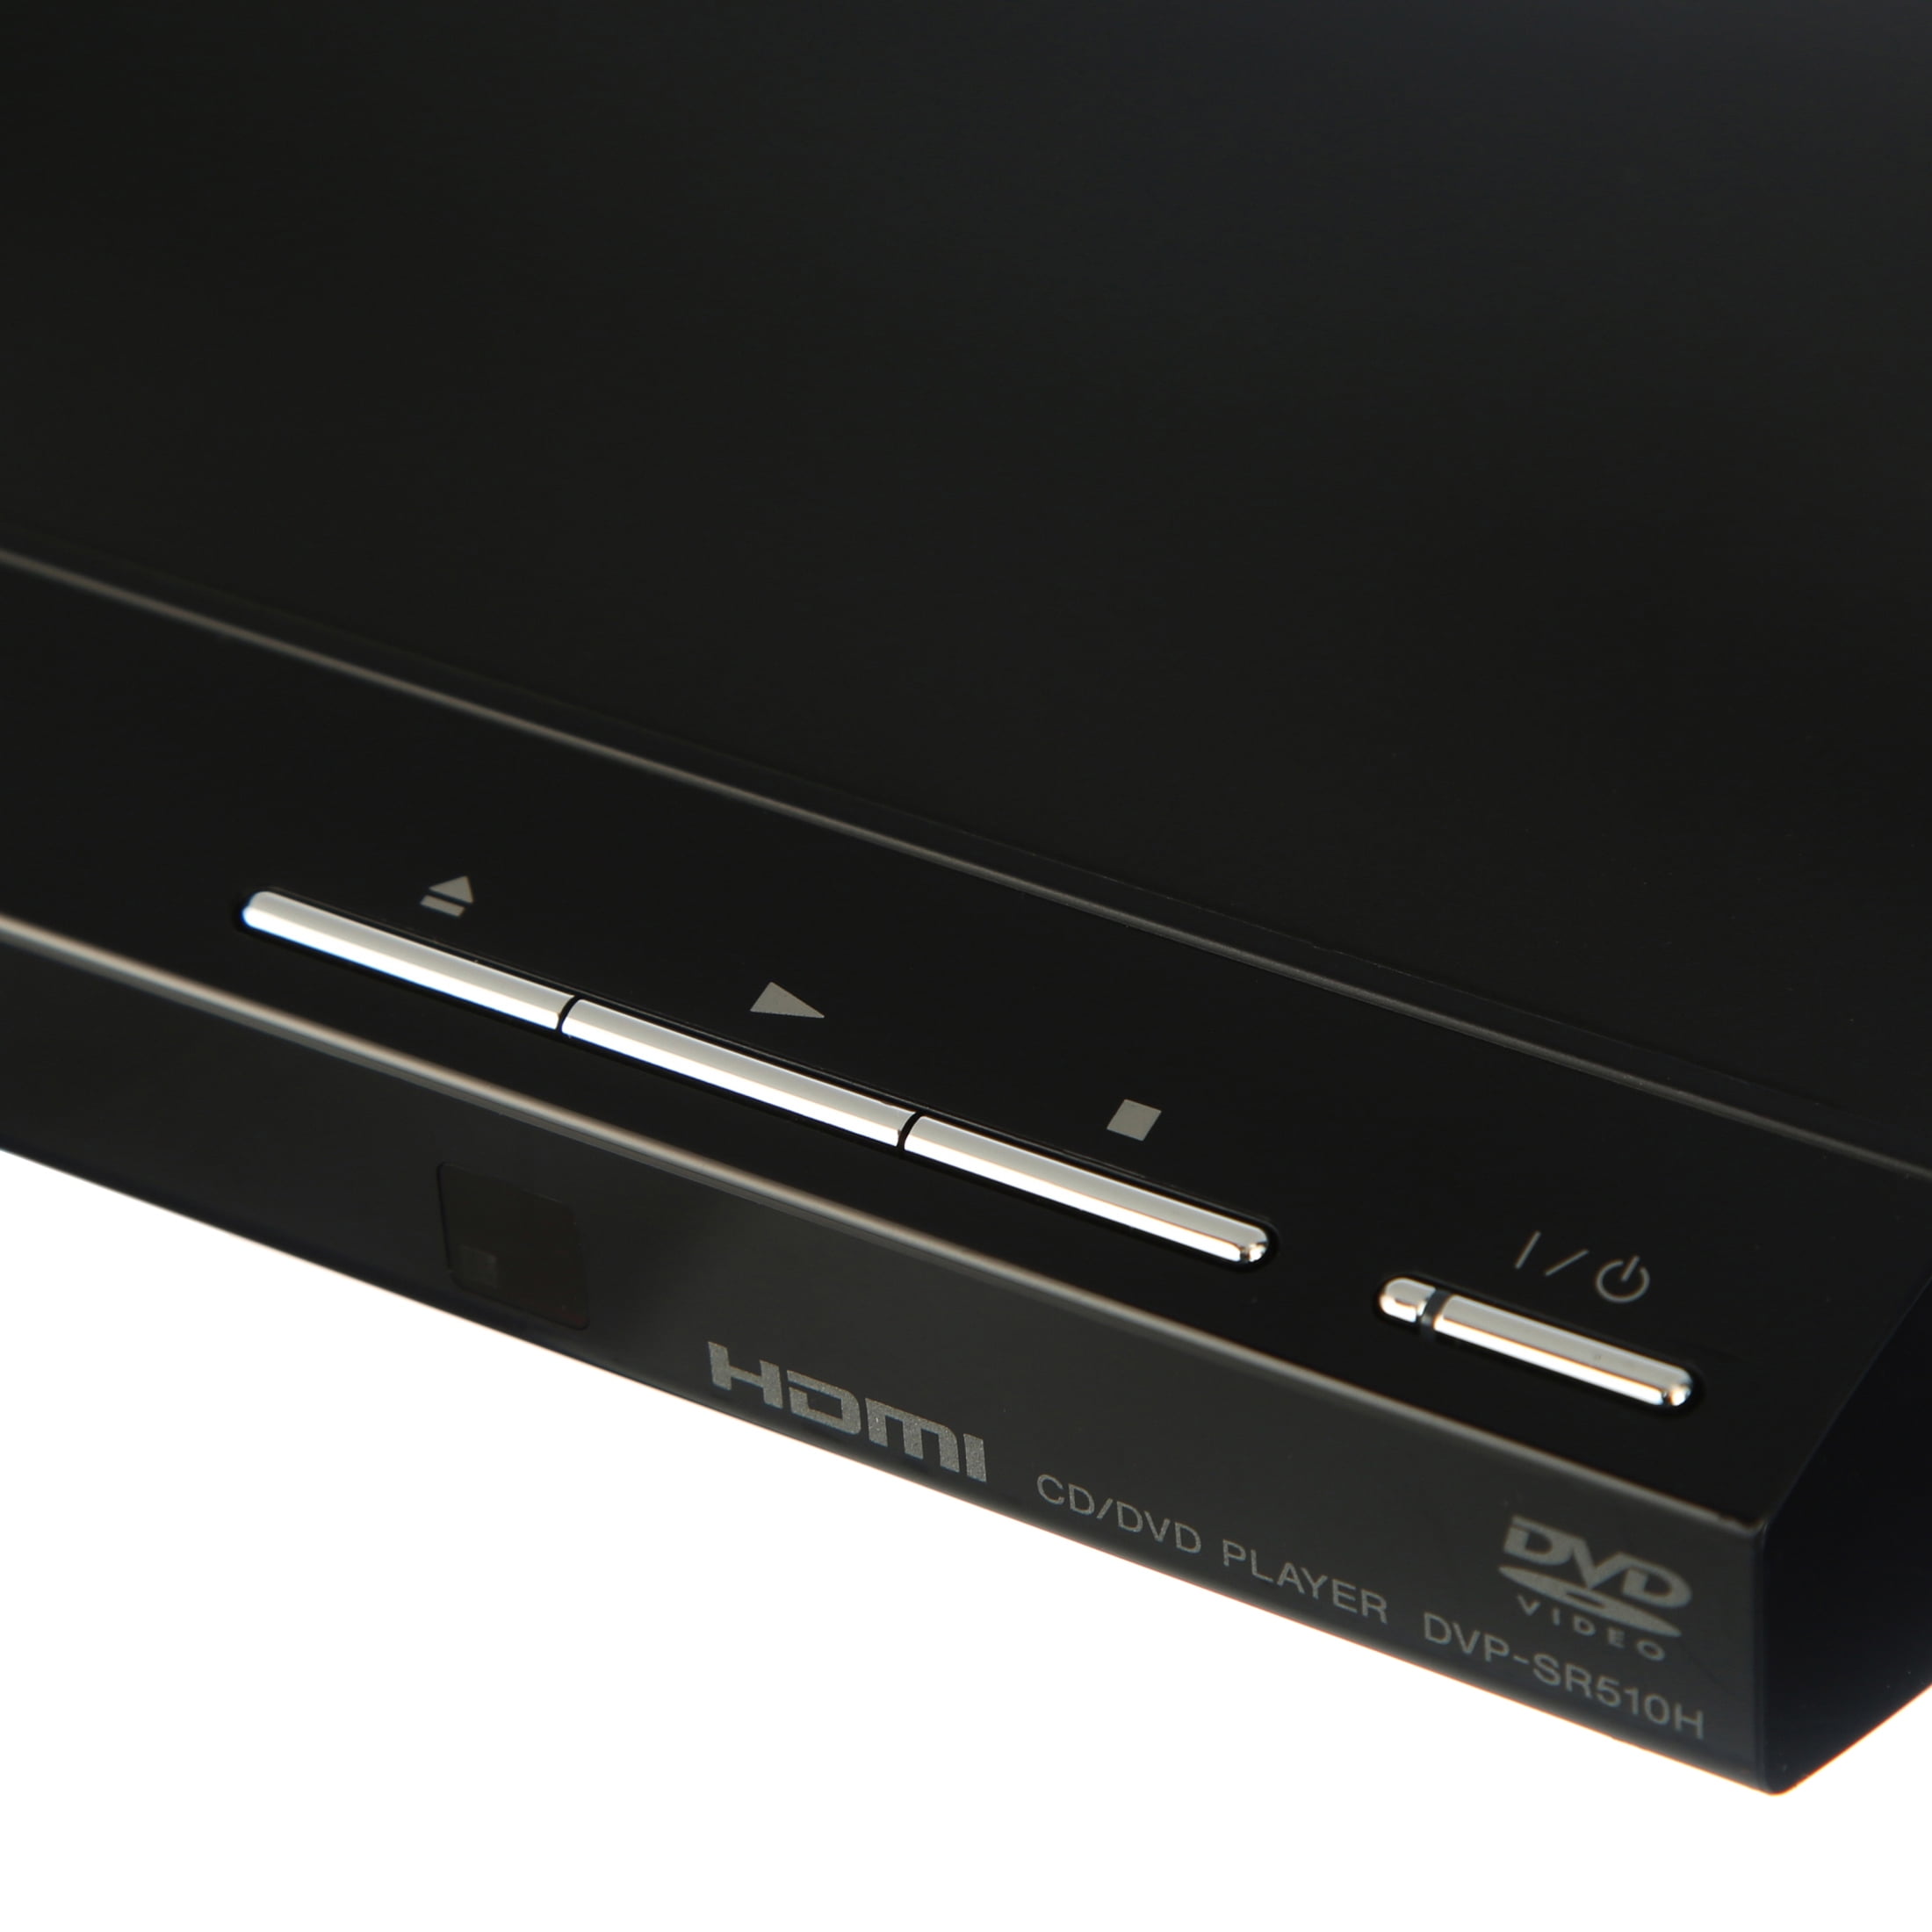 Sony 1080p Upscaling HDMI DVP-SR510H DVD Player 